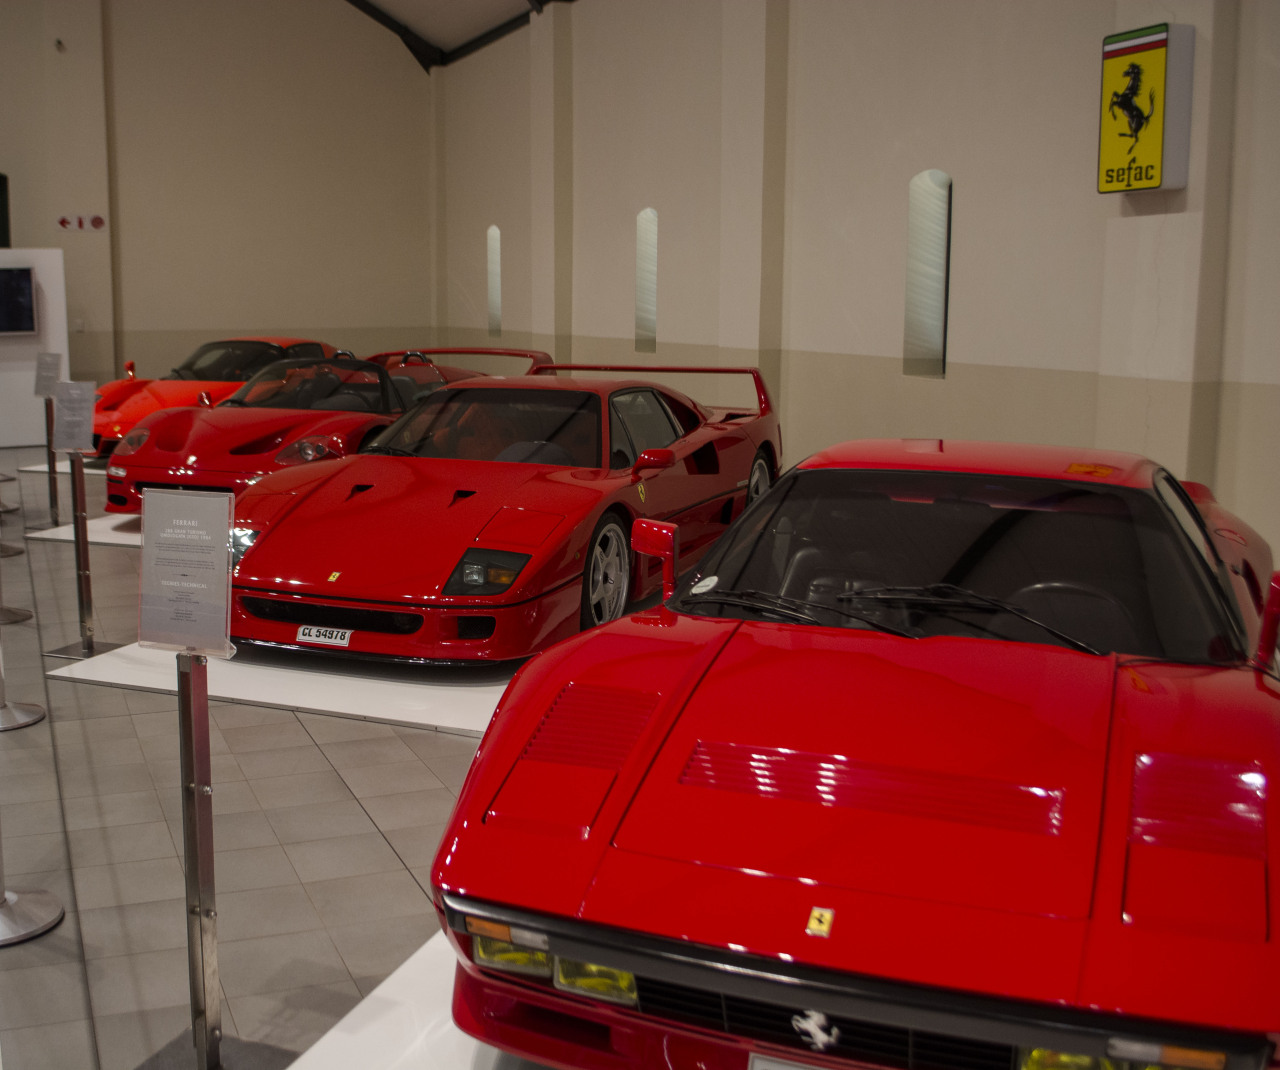 maxmorel:
“ Fantastic 4 - Ferrari 288 ,gto ,f40 ,f50 ,Enzo
”